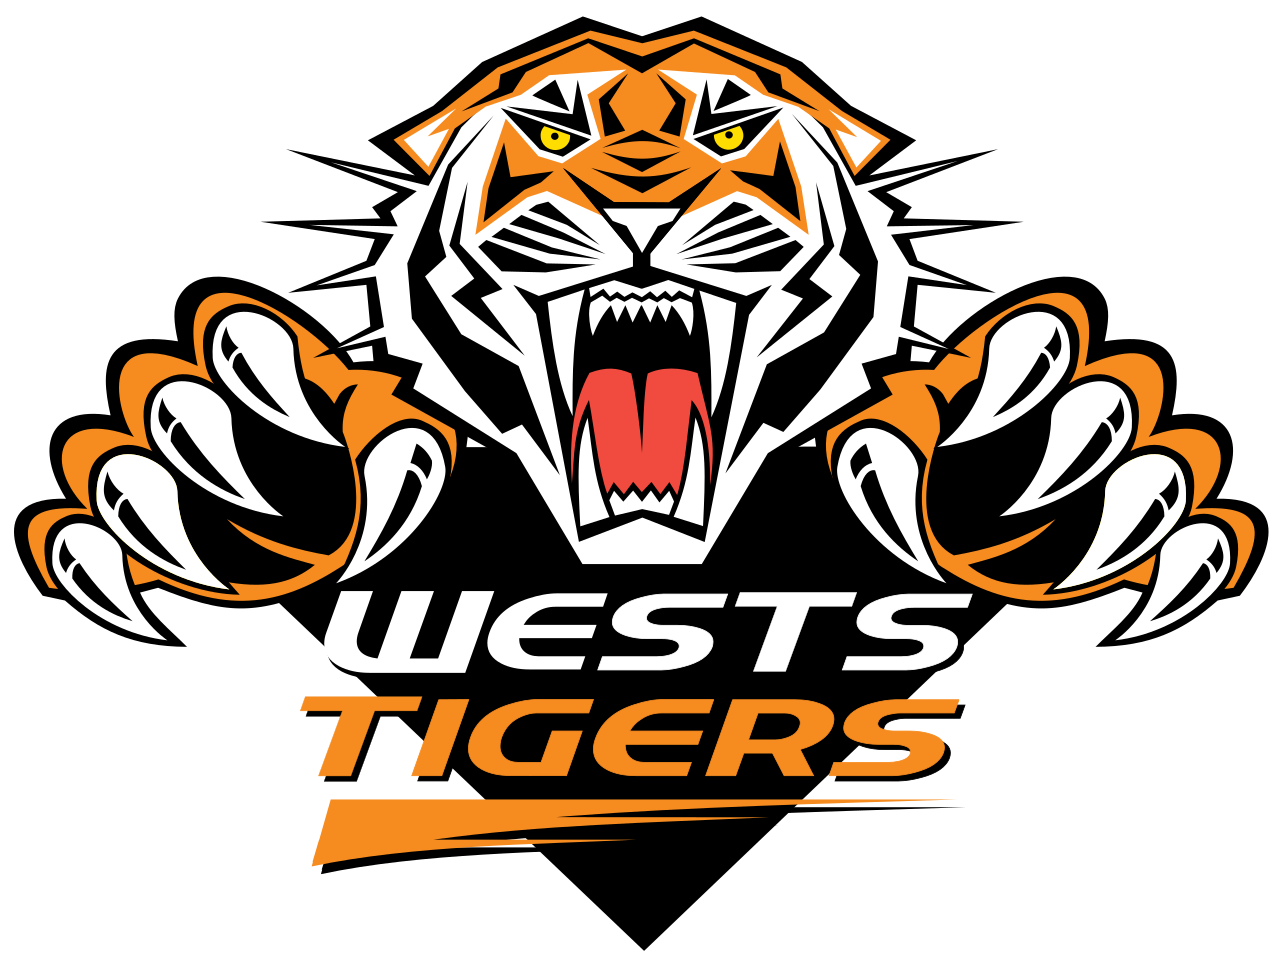 Wests Tigers Logo (1280x969)